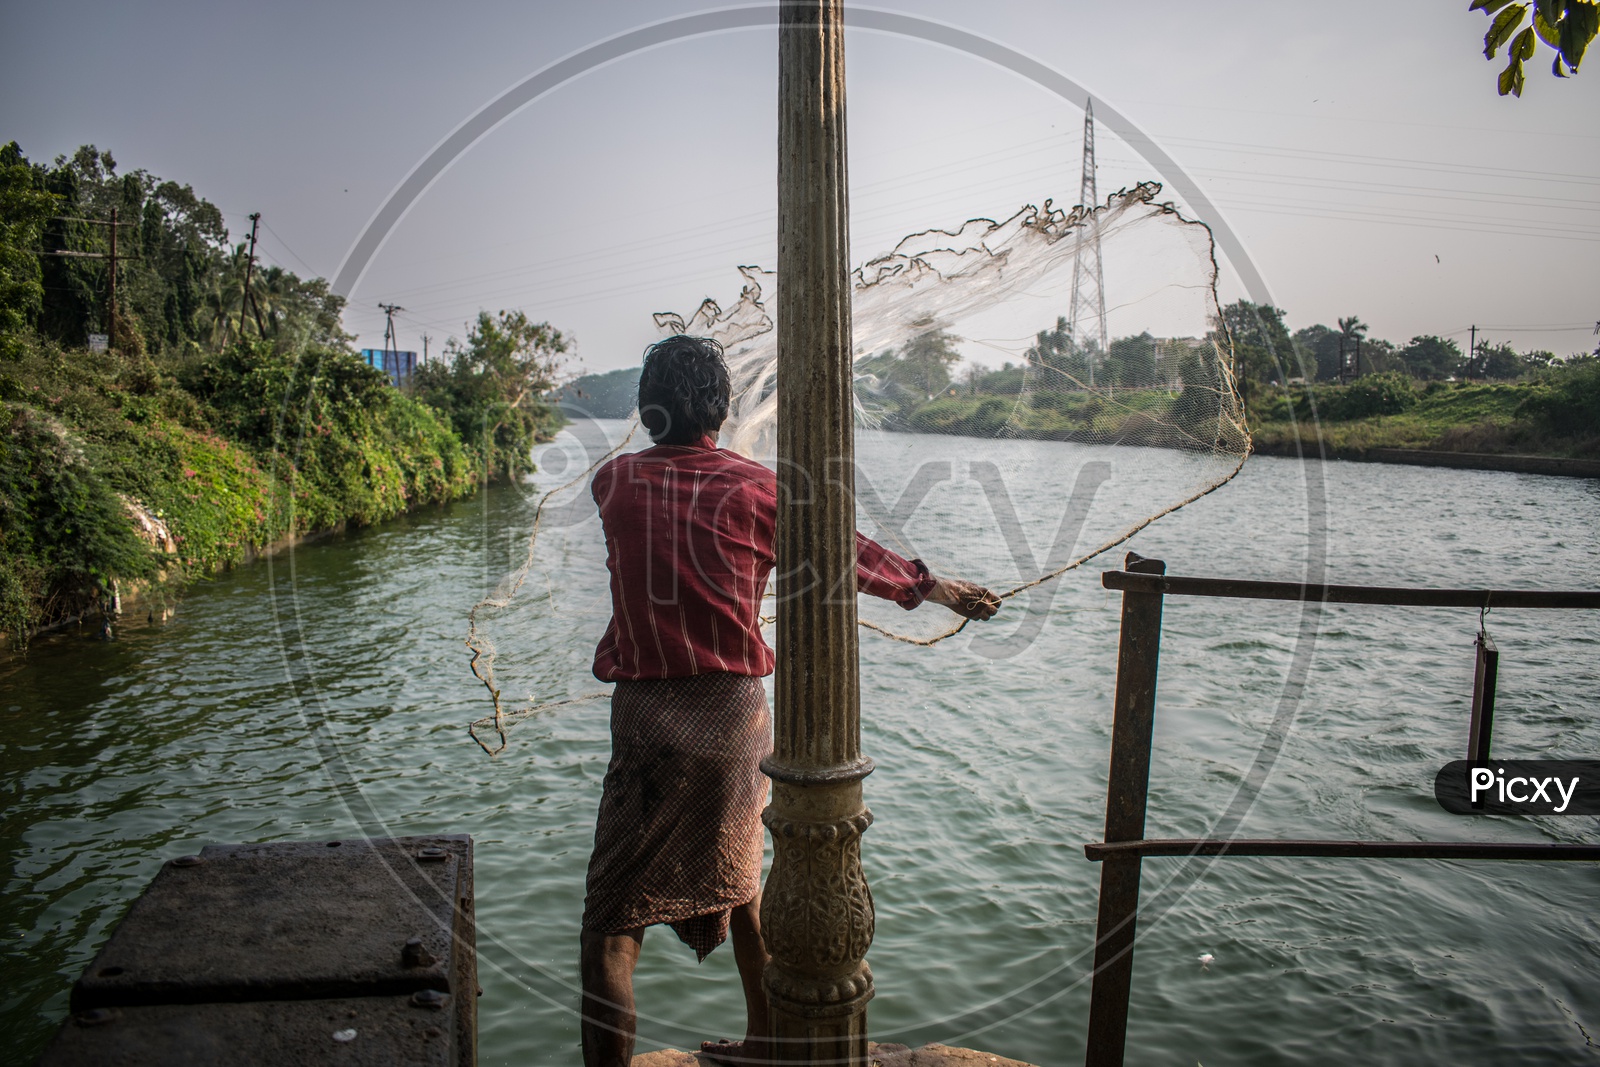 Fisherman casting his net